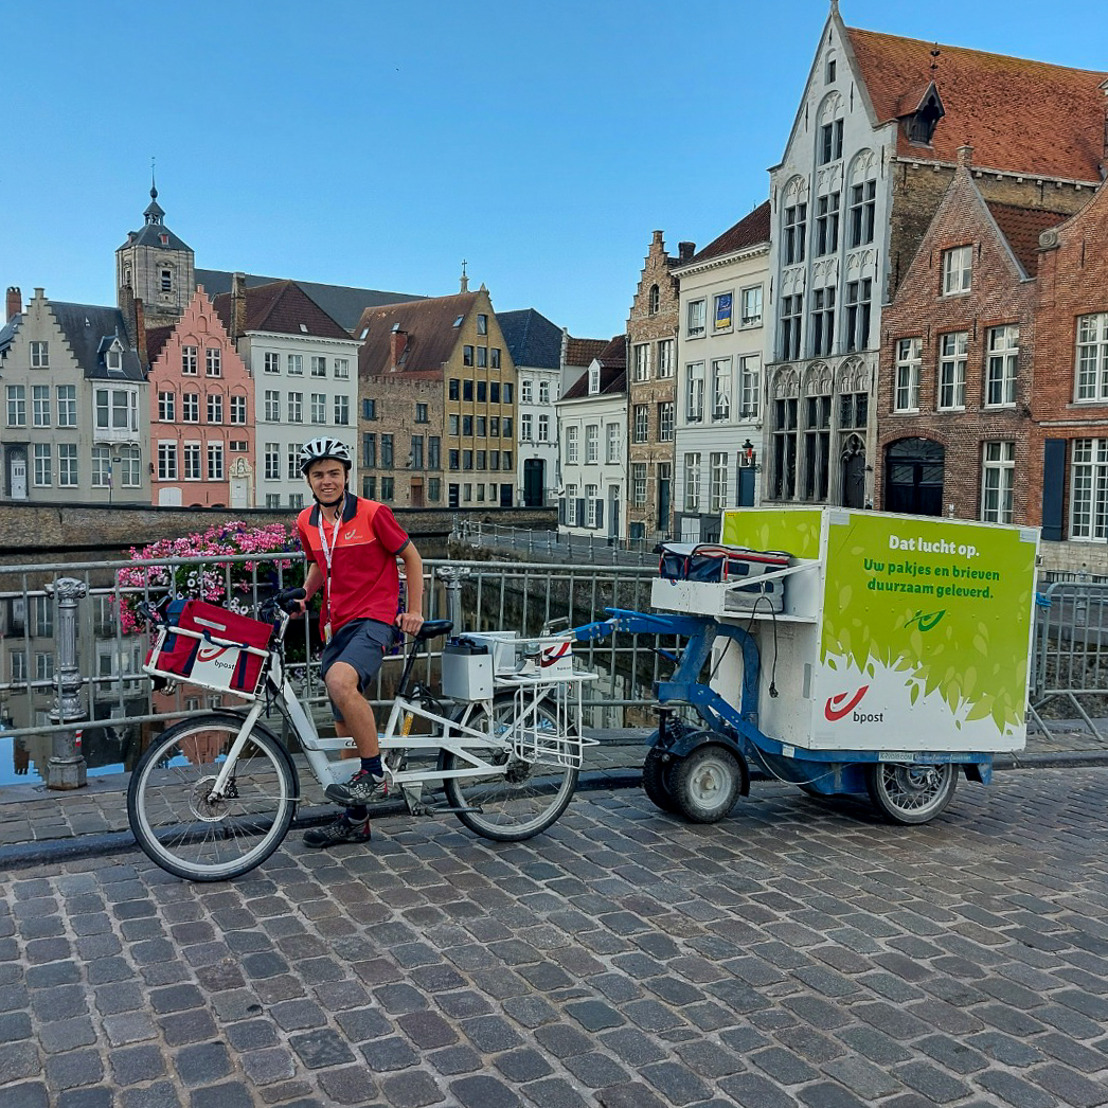 CO2-neutrale bedeling van kranten, brieven en pakjes in de Brugse binnenstad